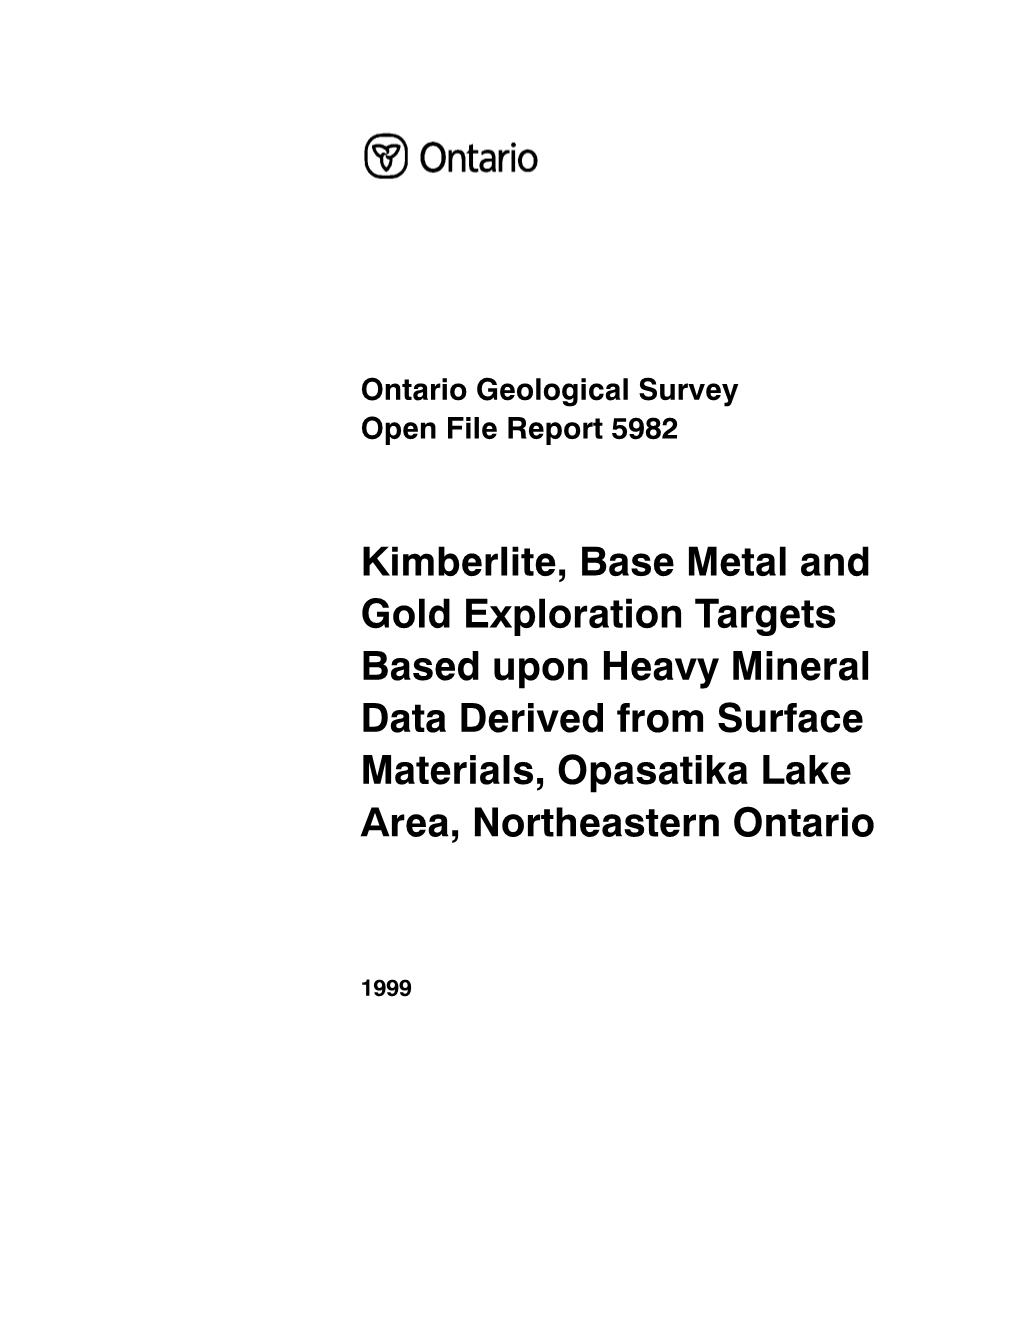 Kimberlite, Base Metal and Gold Exploration Targets, Opasatika